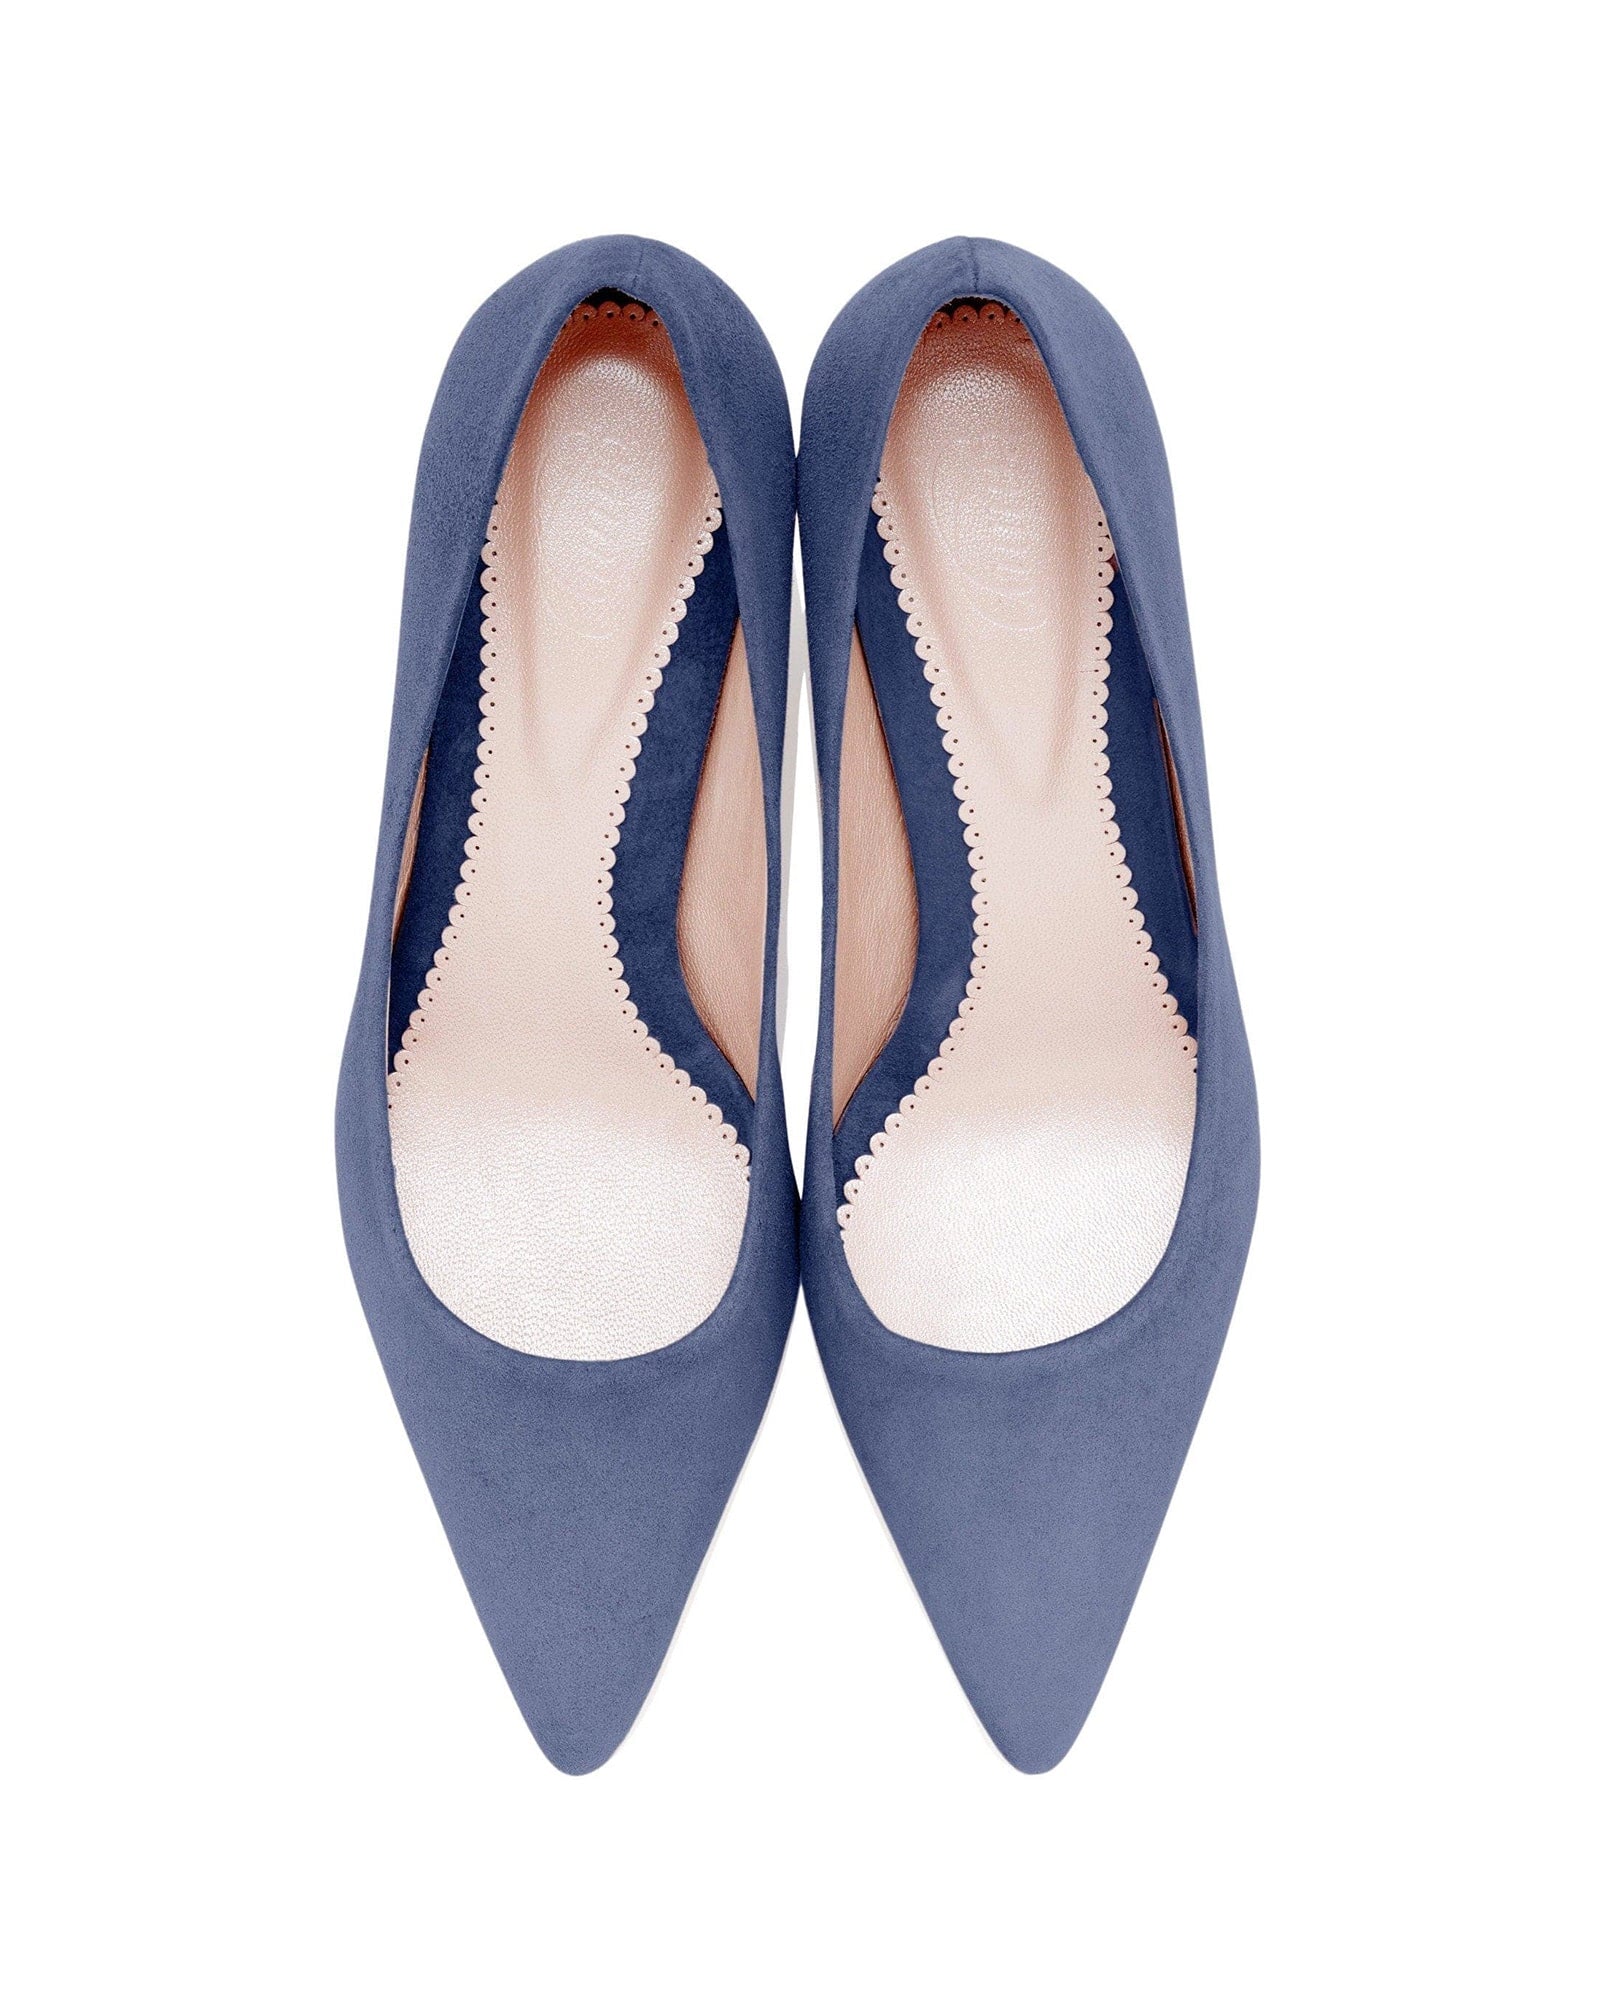 Olivia Kitten Riviera Fashion Shoe Blue-Grey Suede Pointed Kitten Heel  image